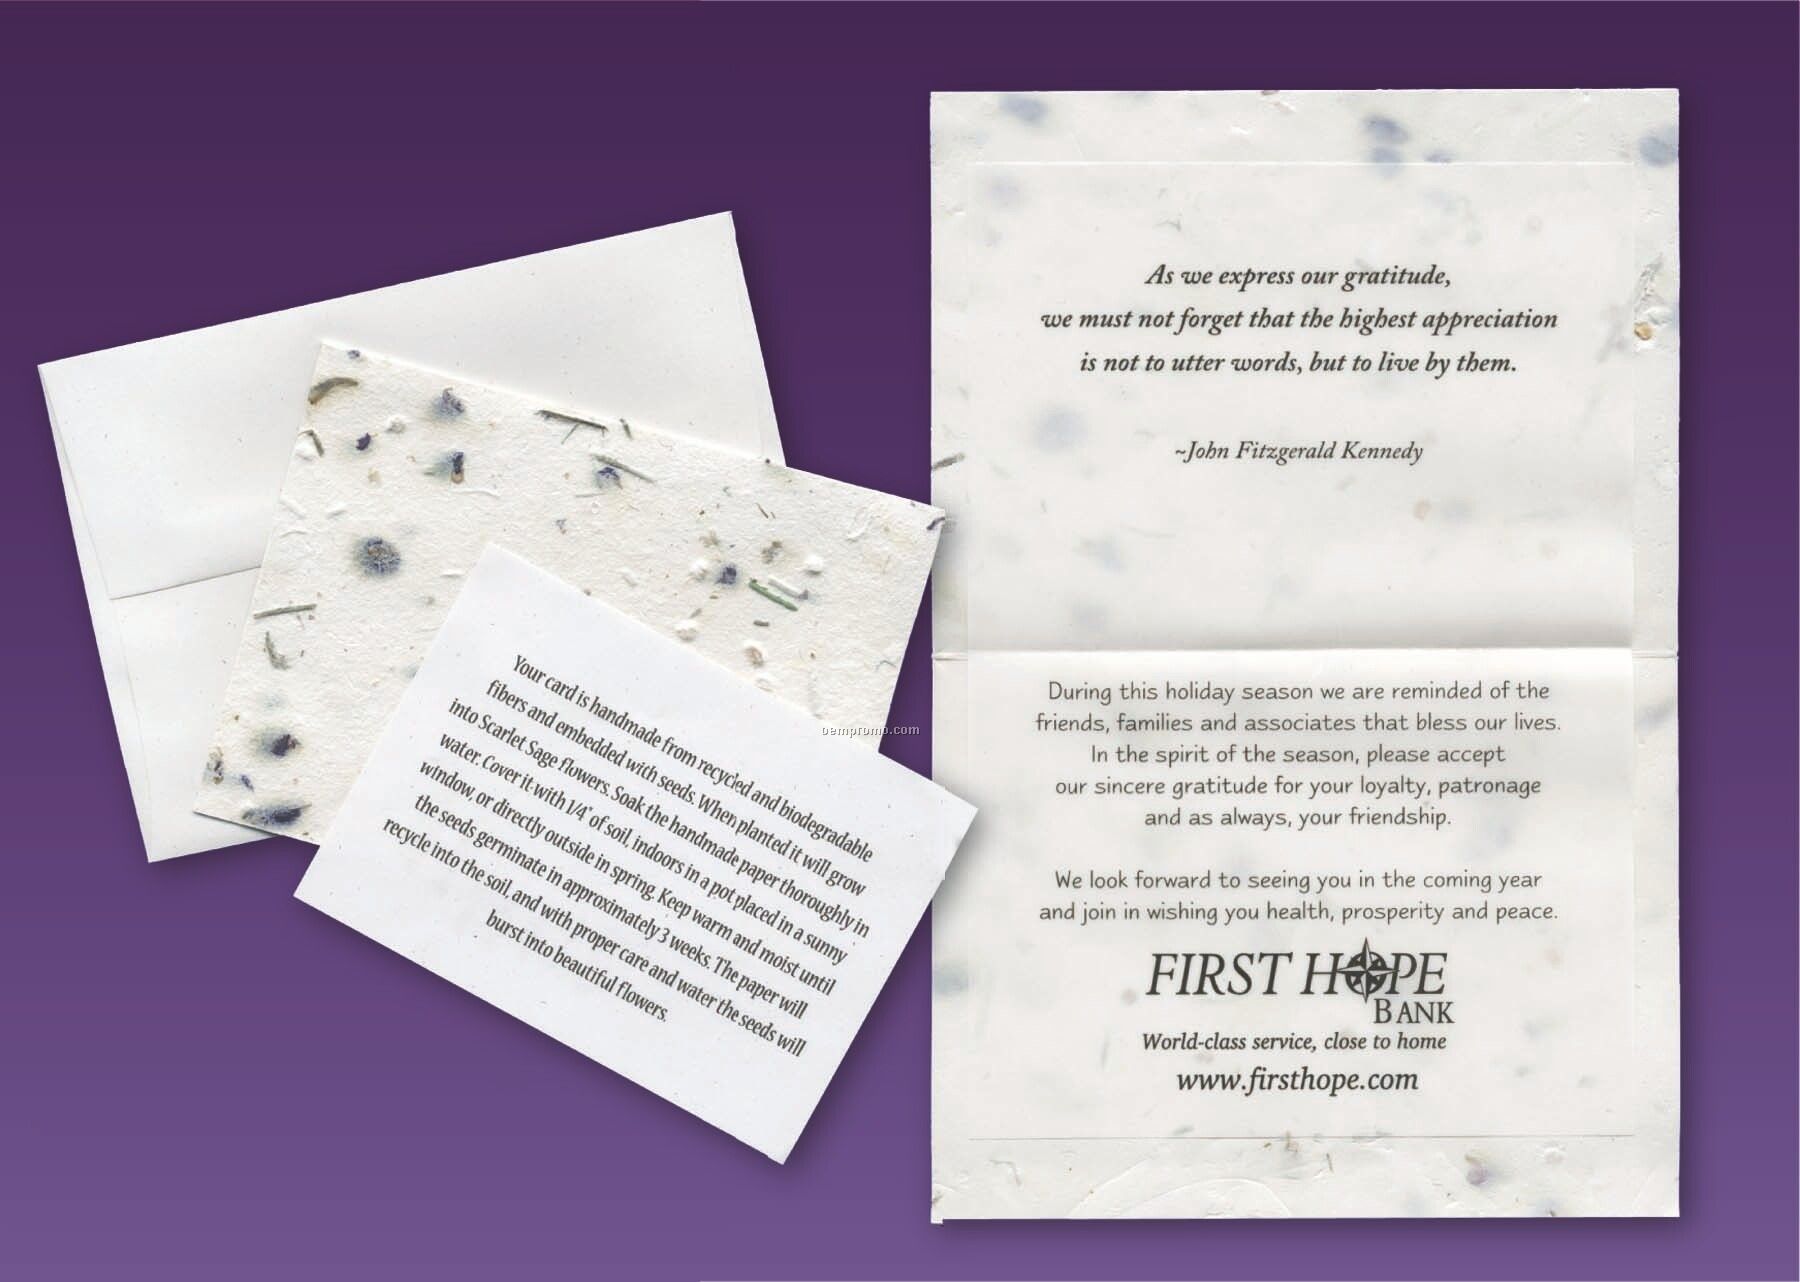 Printed Wedding Invitation Seed Paper Card